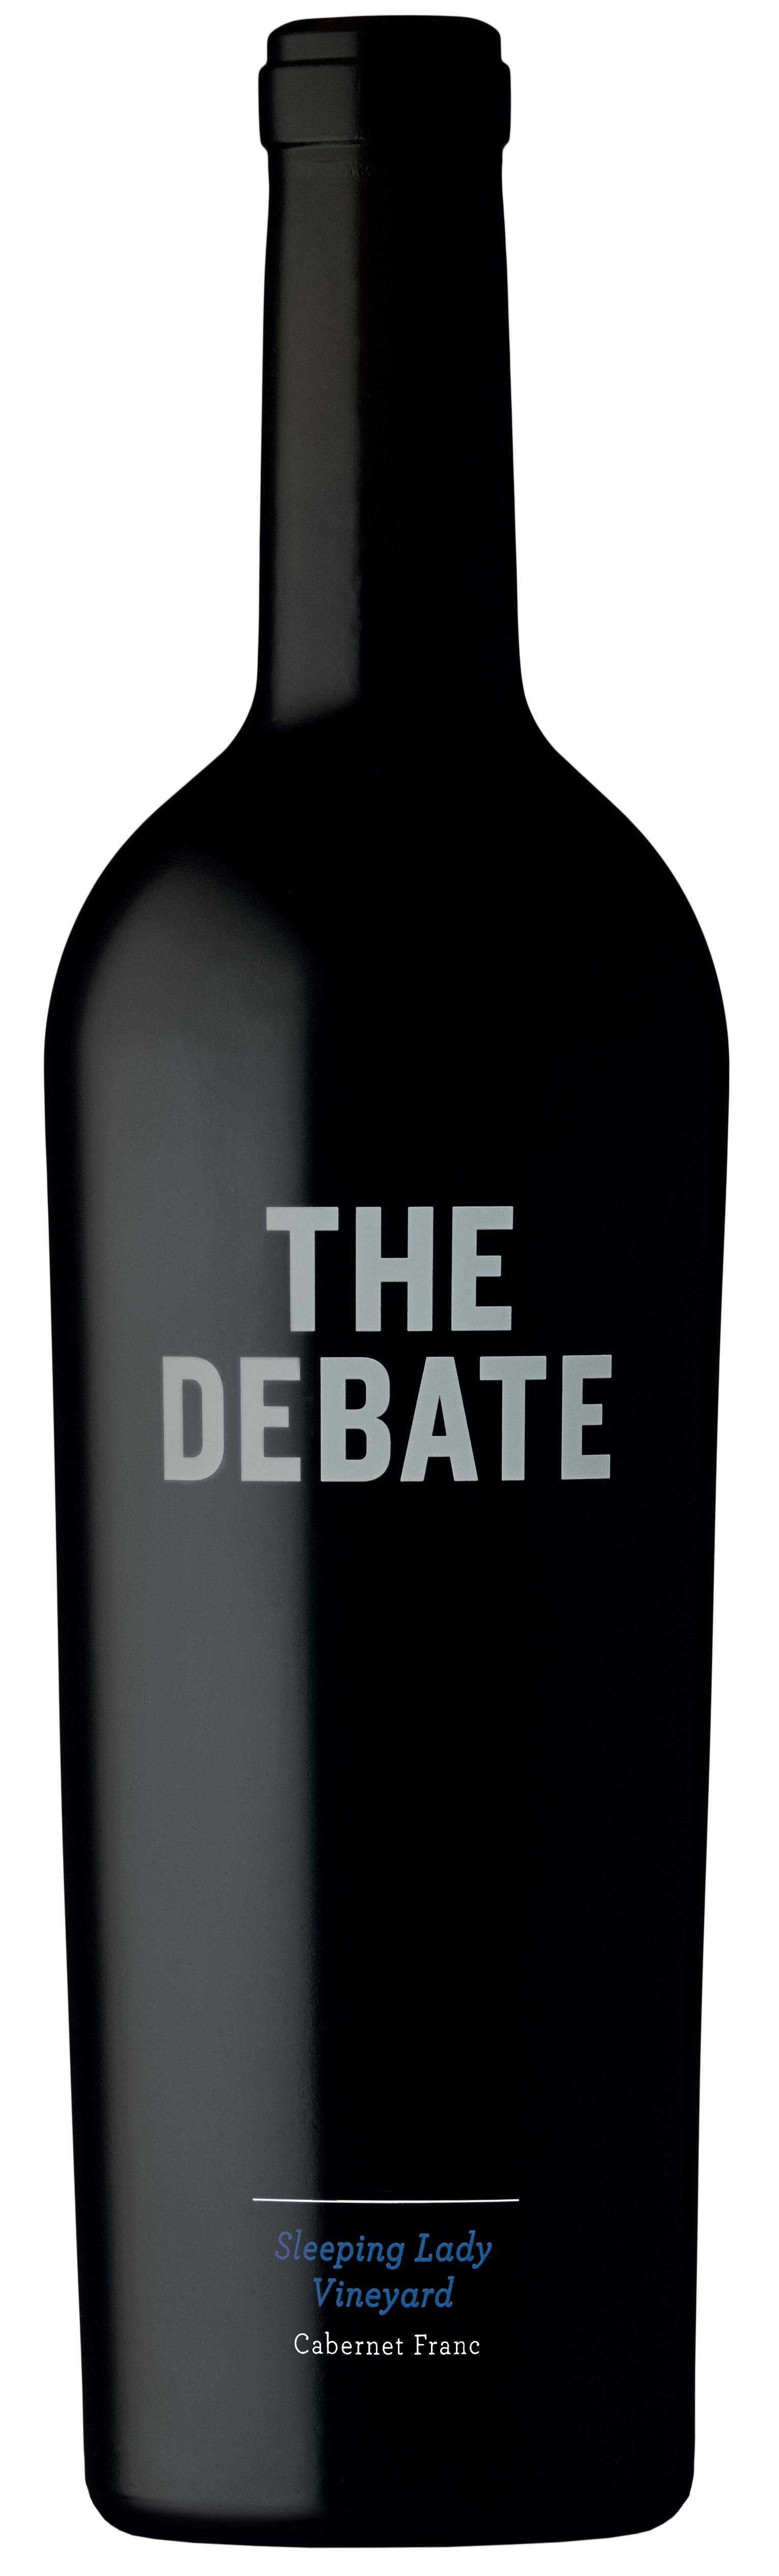 2018 The Debate Sleeping Lady Vineyard Cabernet Franc Napa Valley, USA image